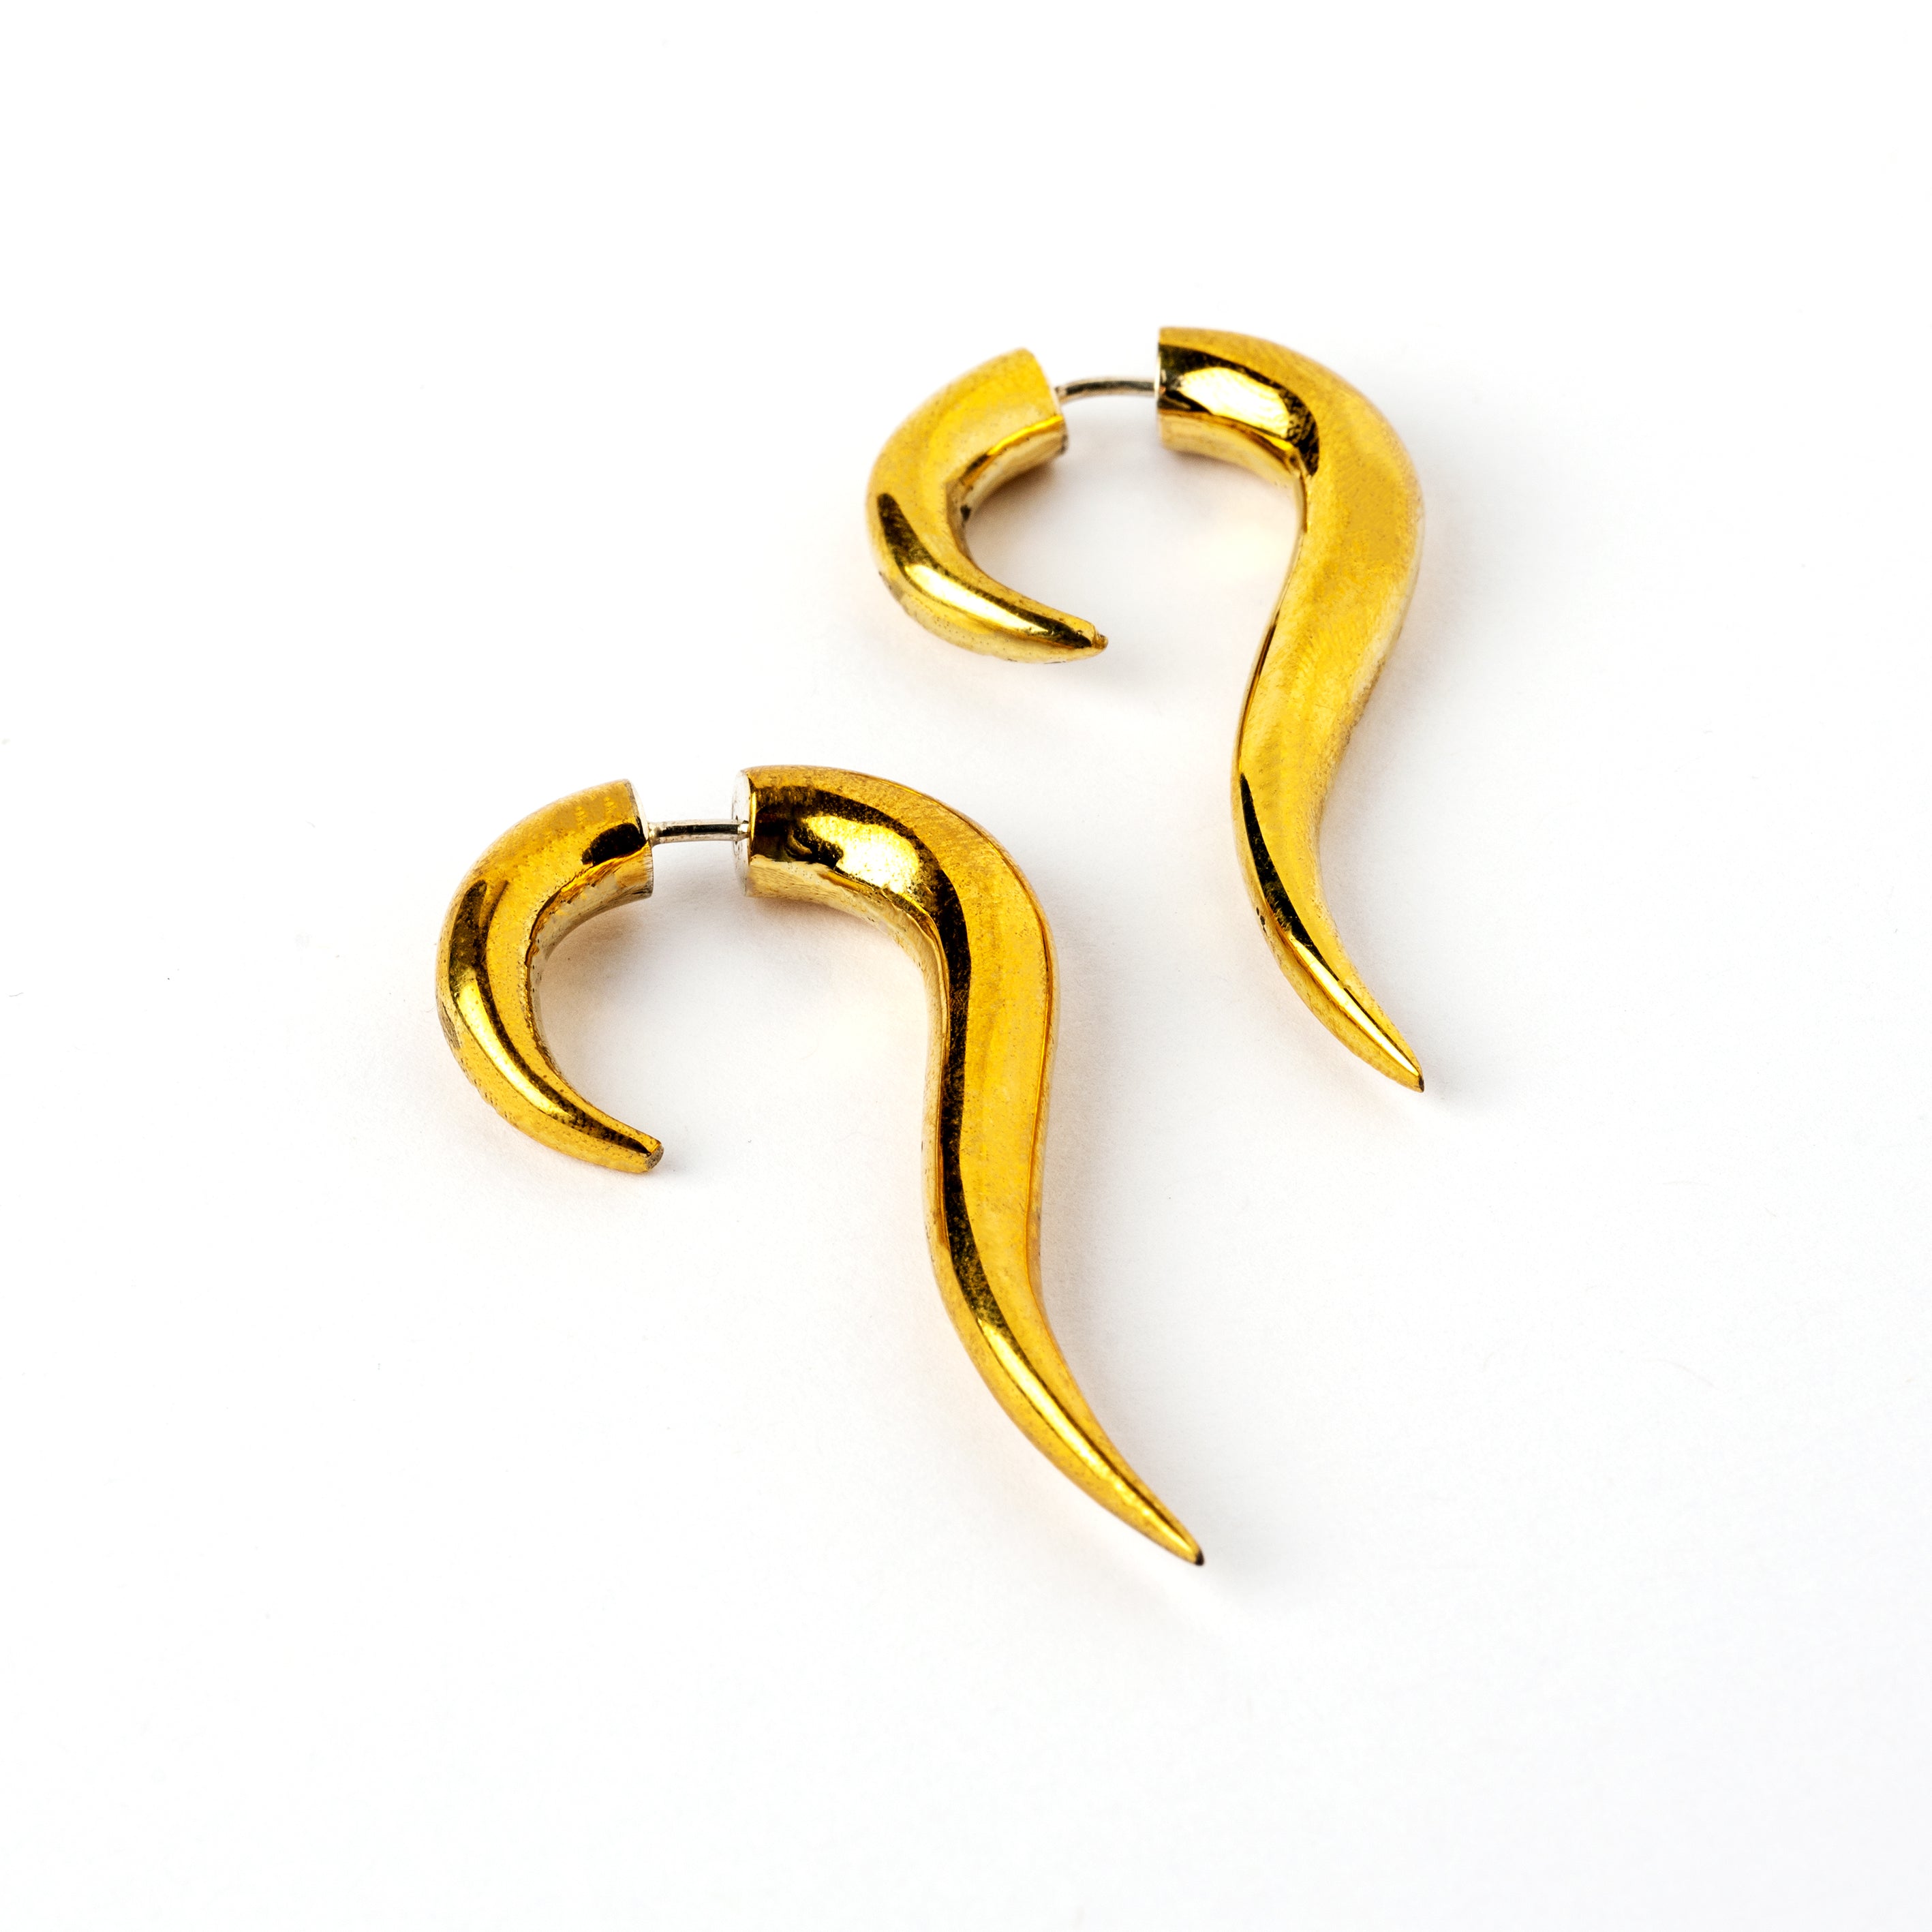 pair of Maui Brass Fake Gauge Earrings side view